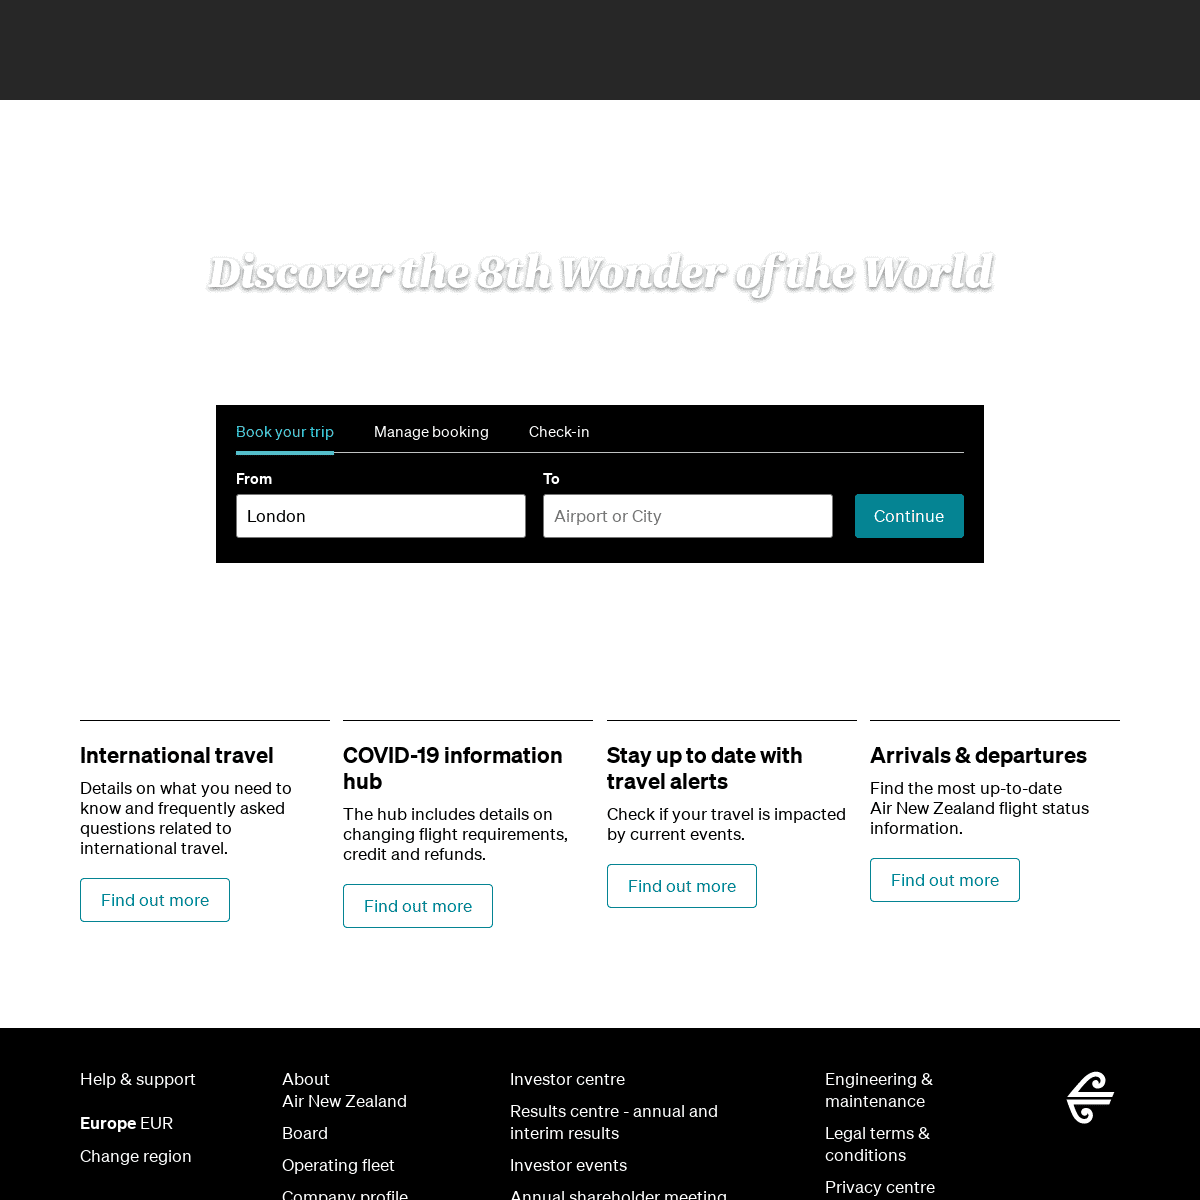 A complete backup of https://airnewzealand.eu